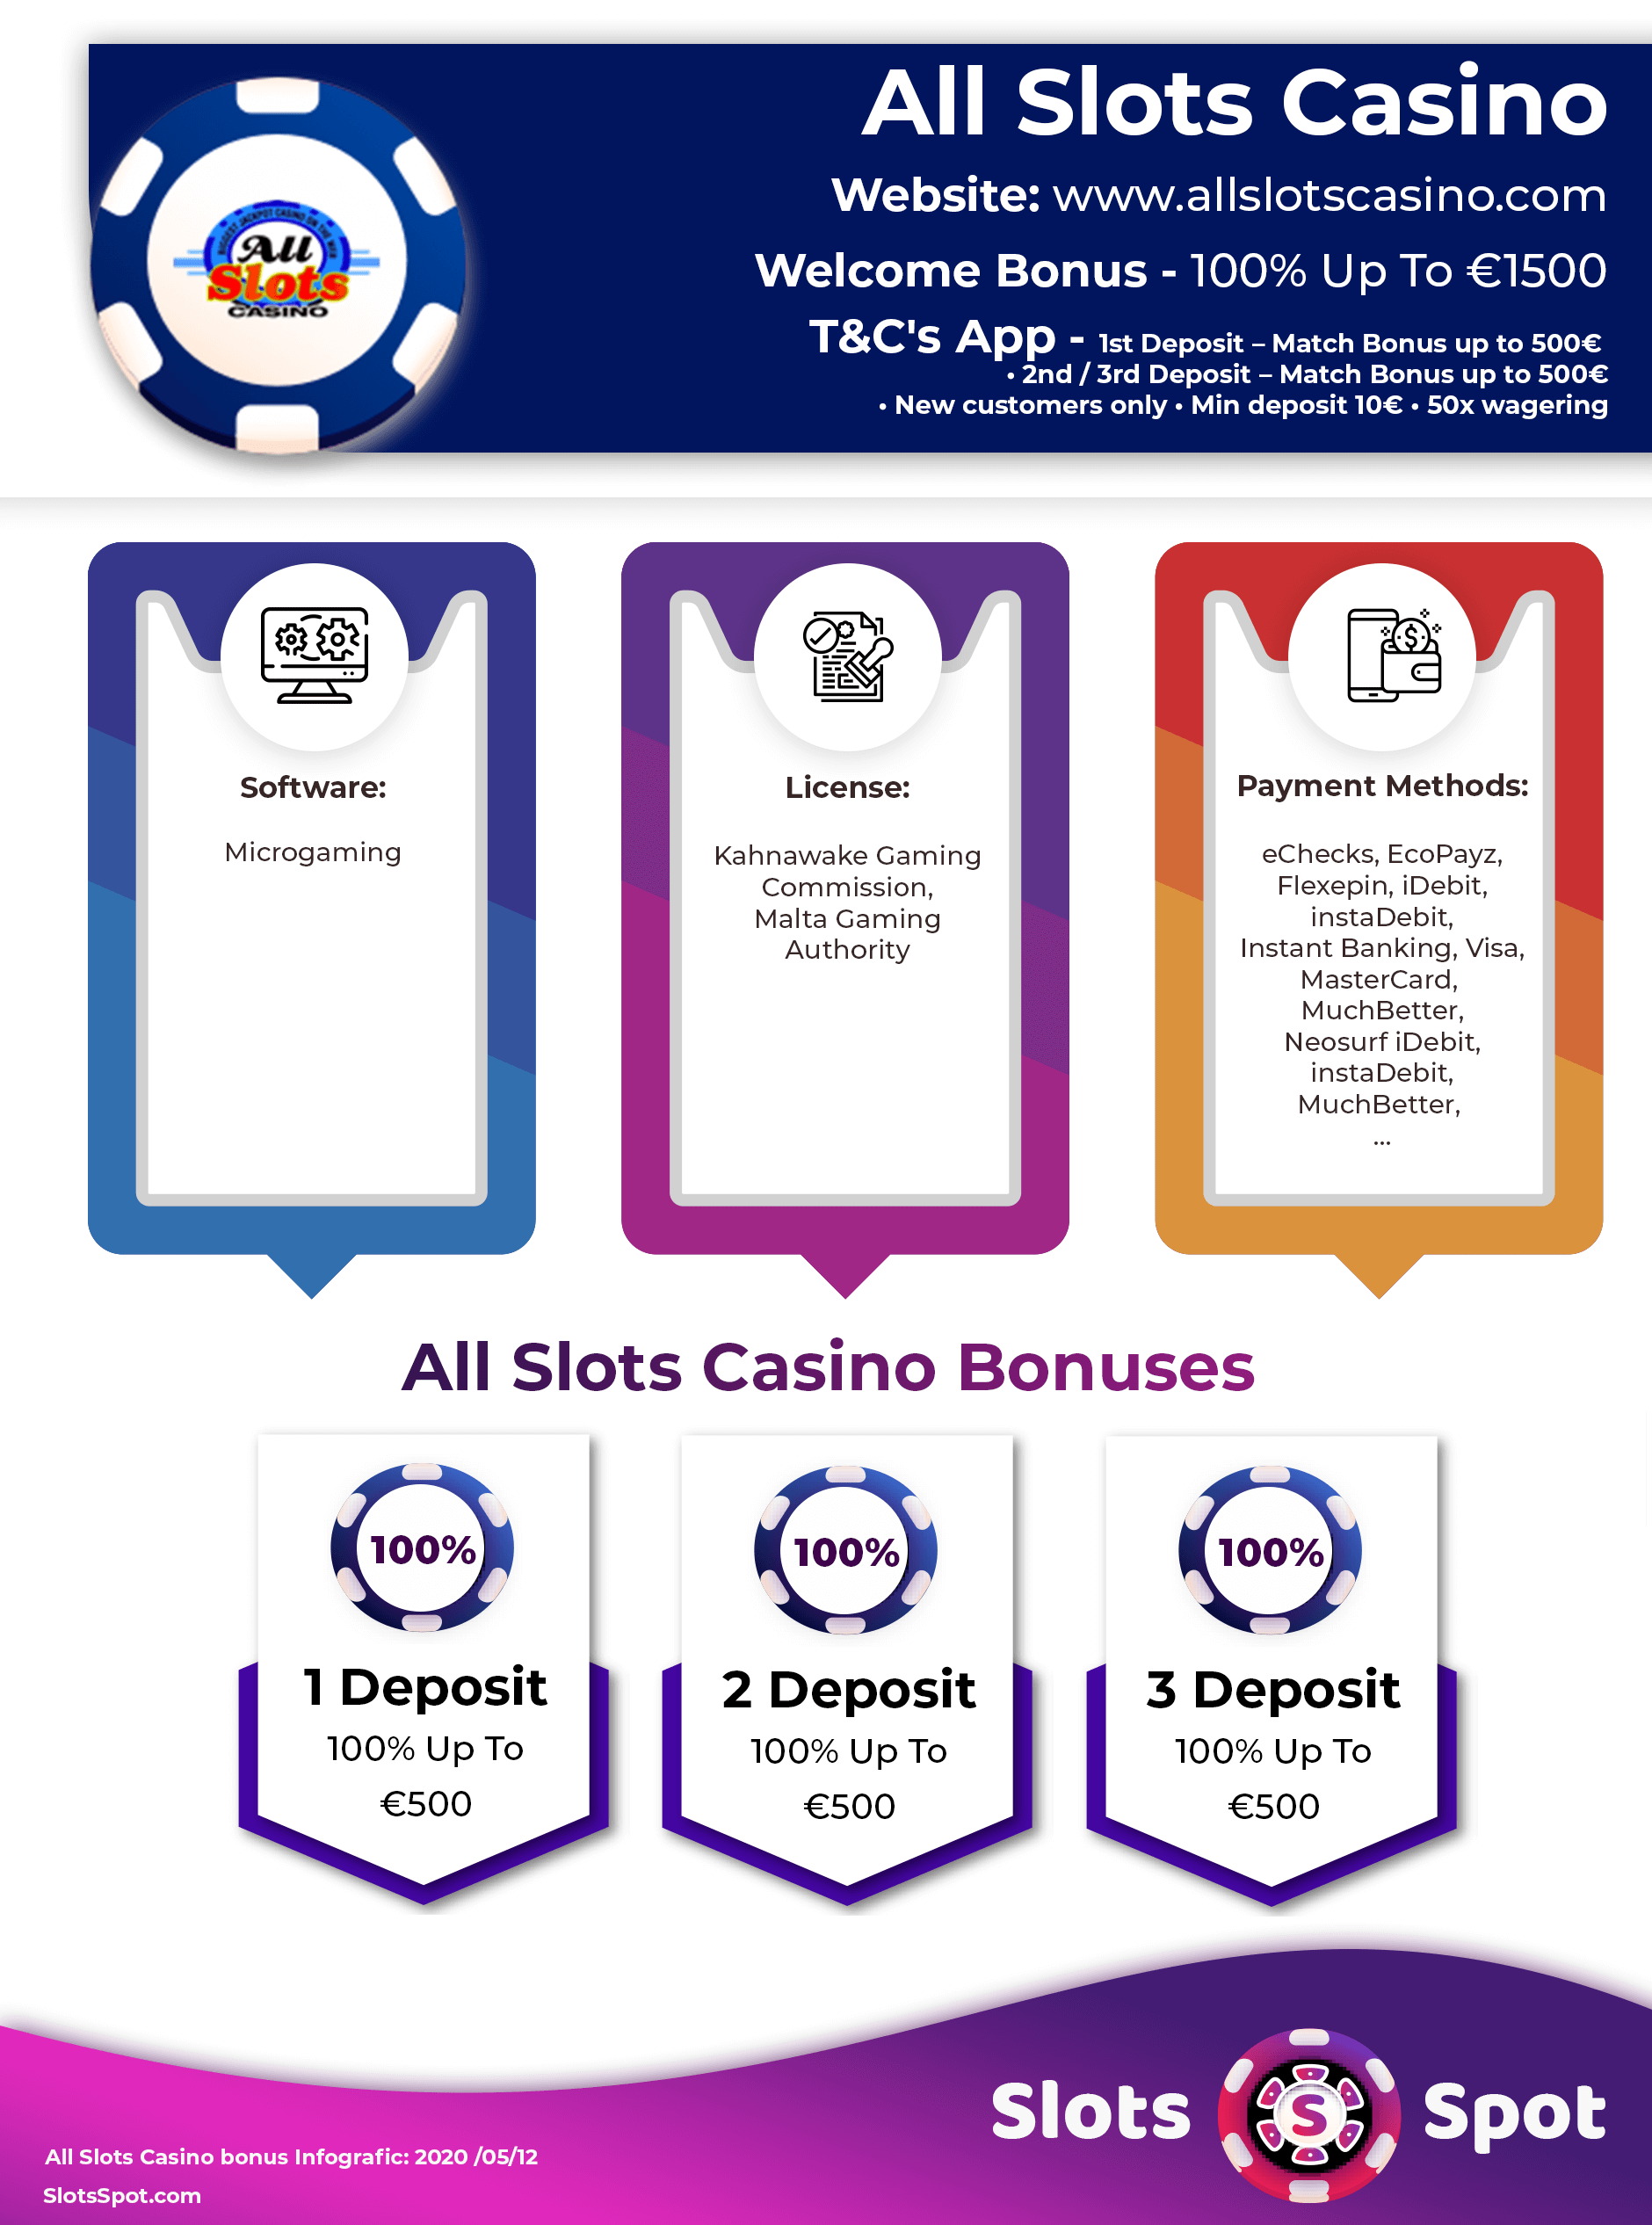 All Slots Casino No Deposit Bonus Codes 2017